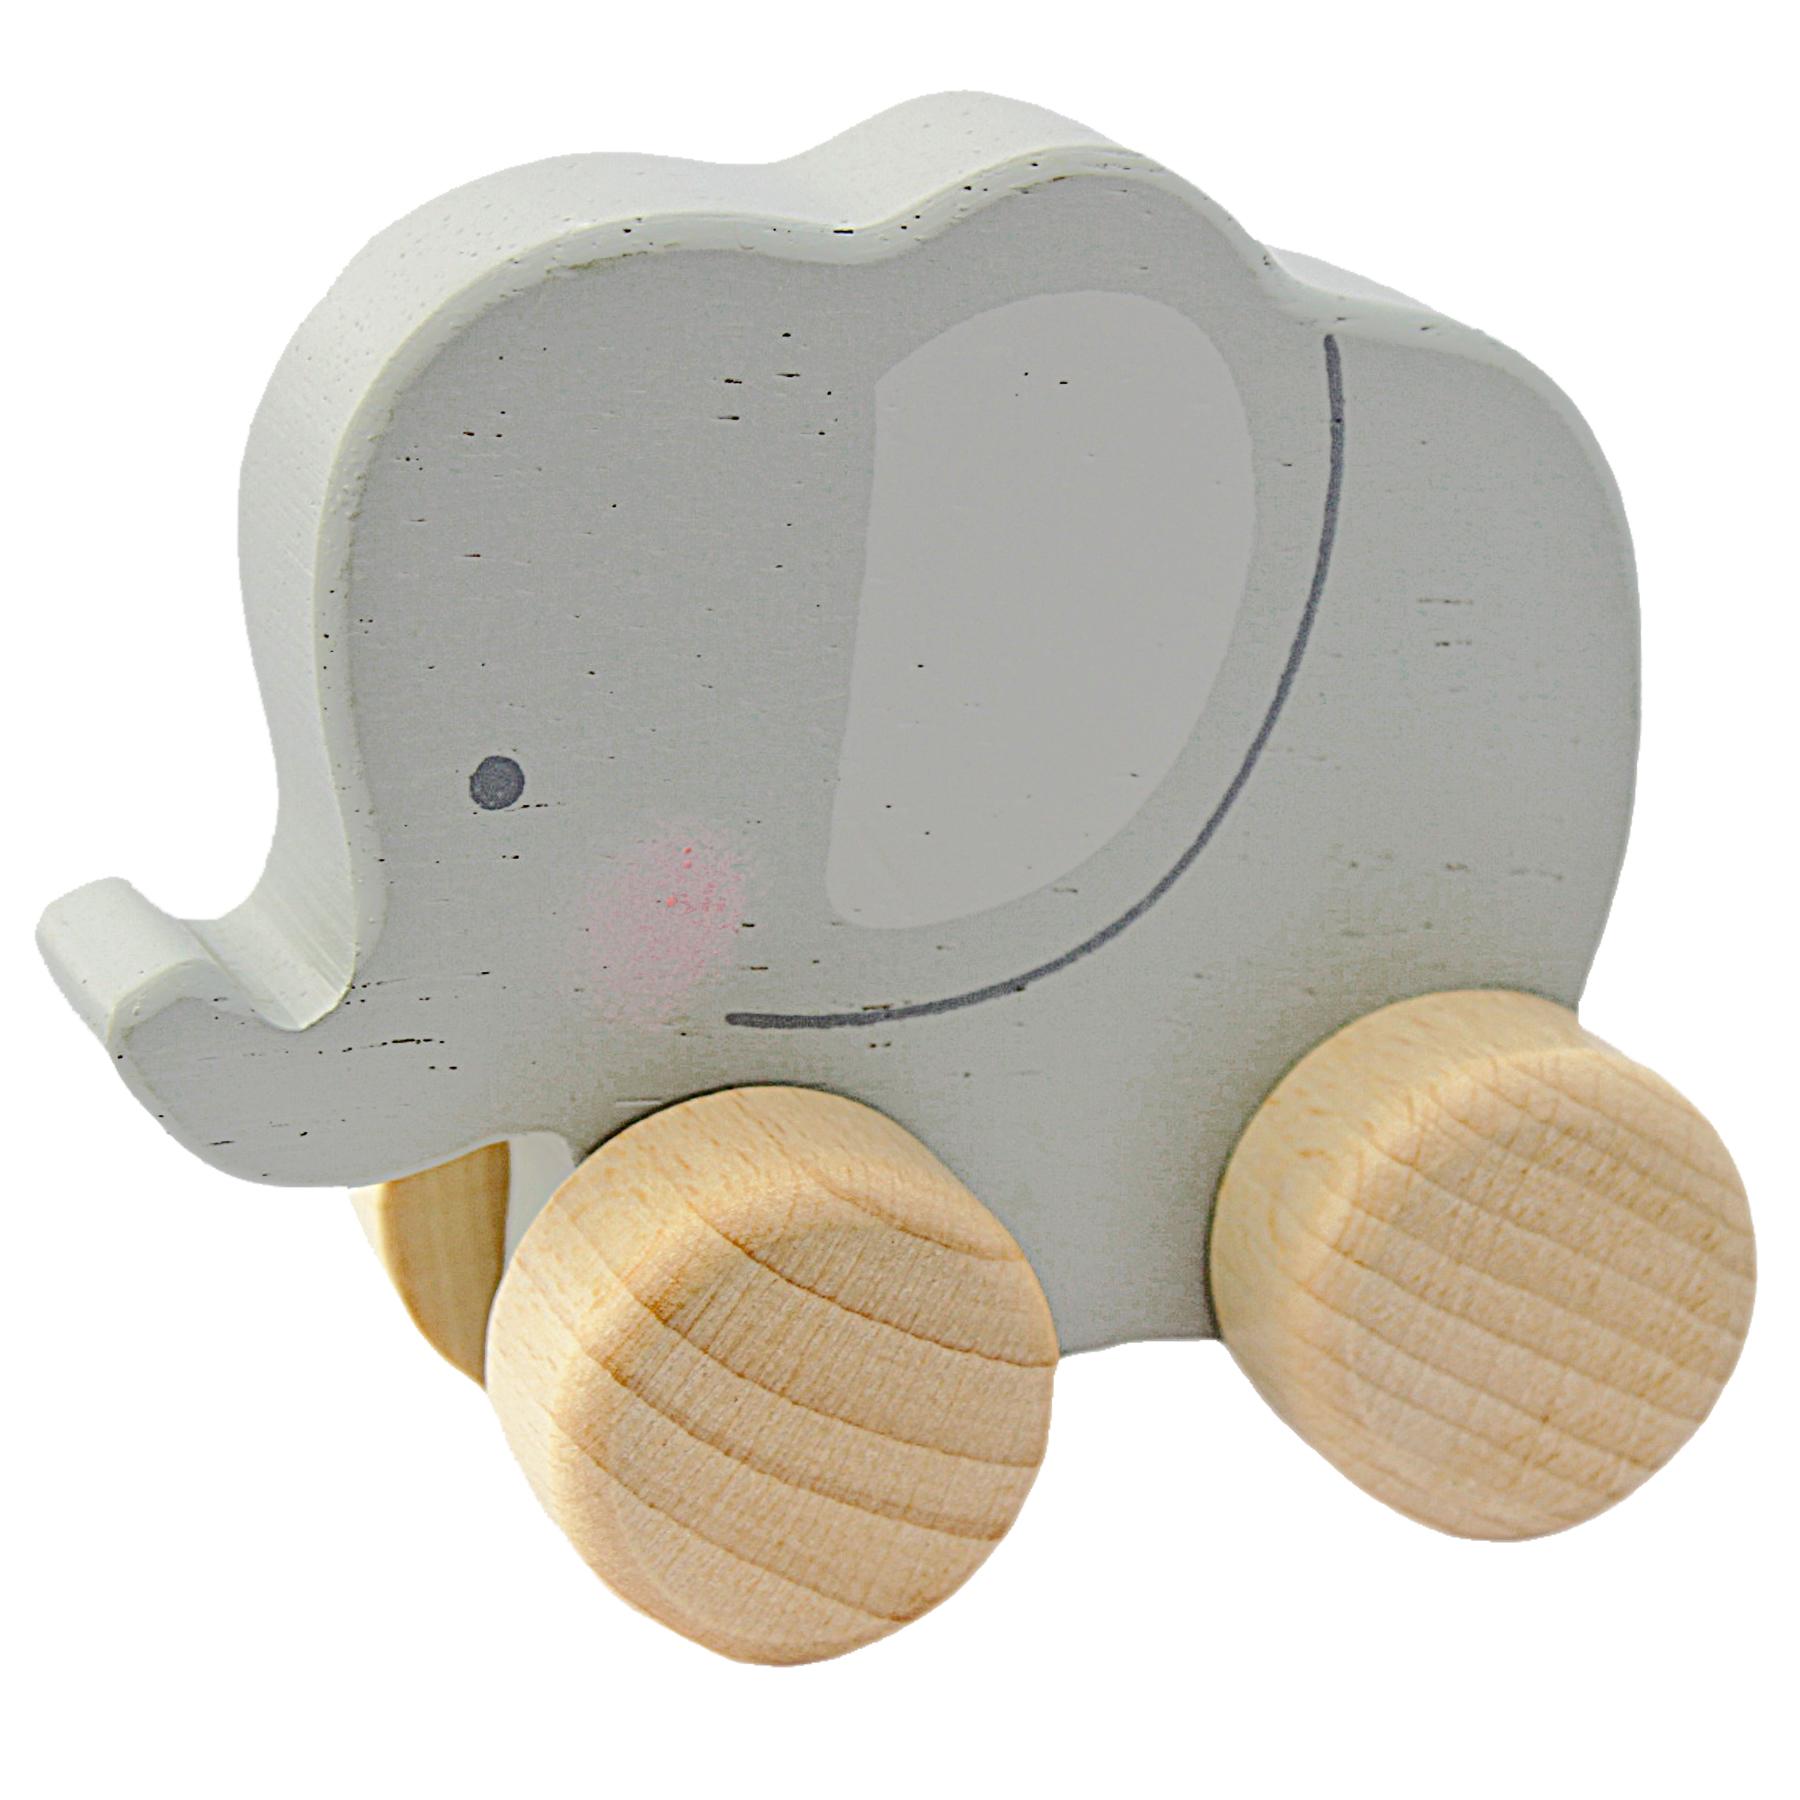 Bambino by Juliana® Wooden Push Along Elephant